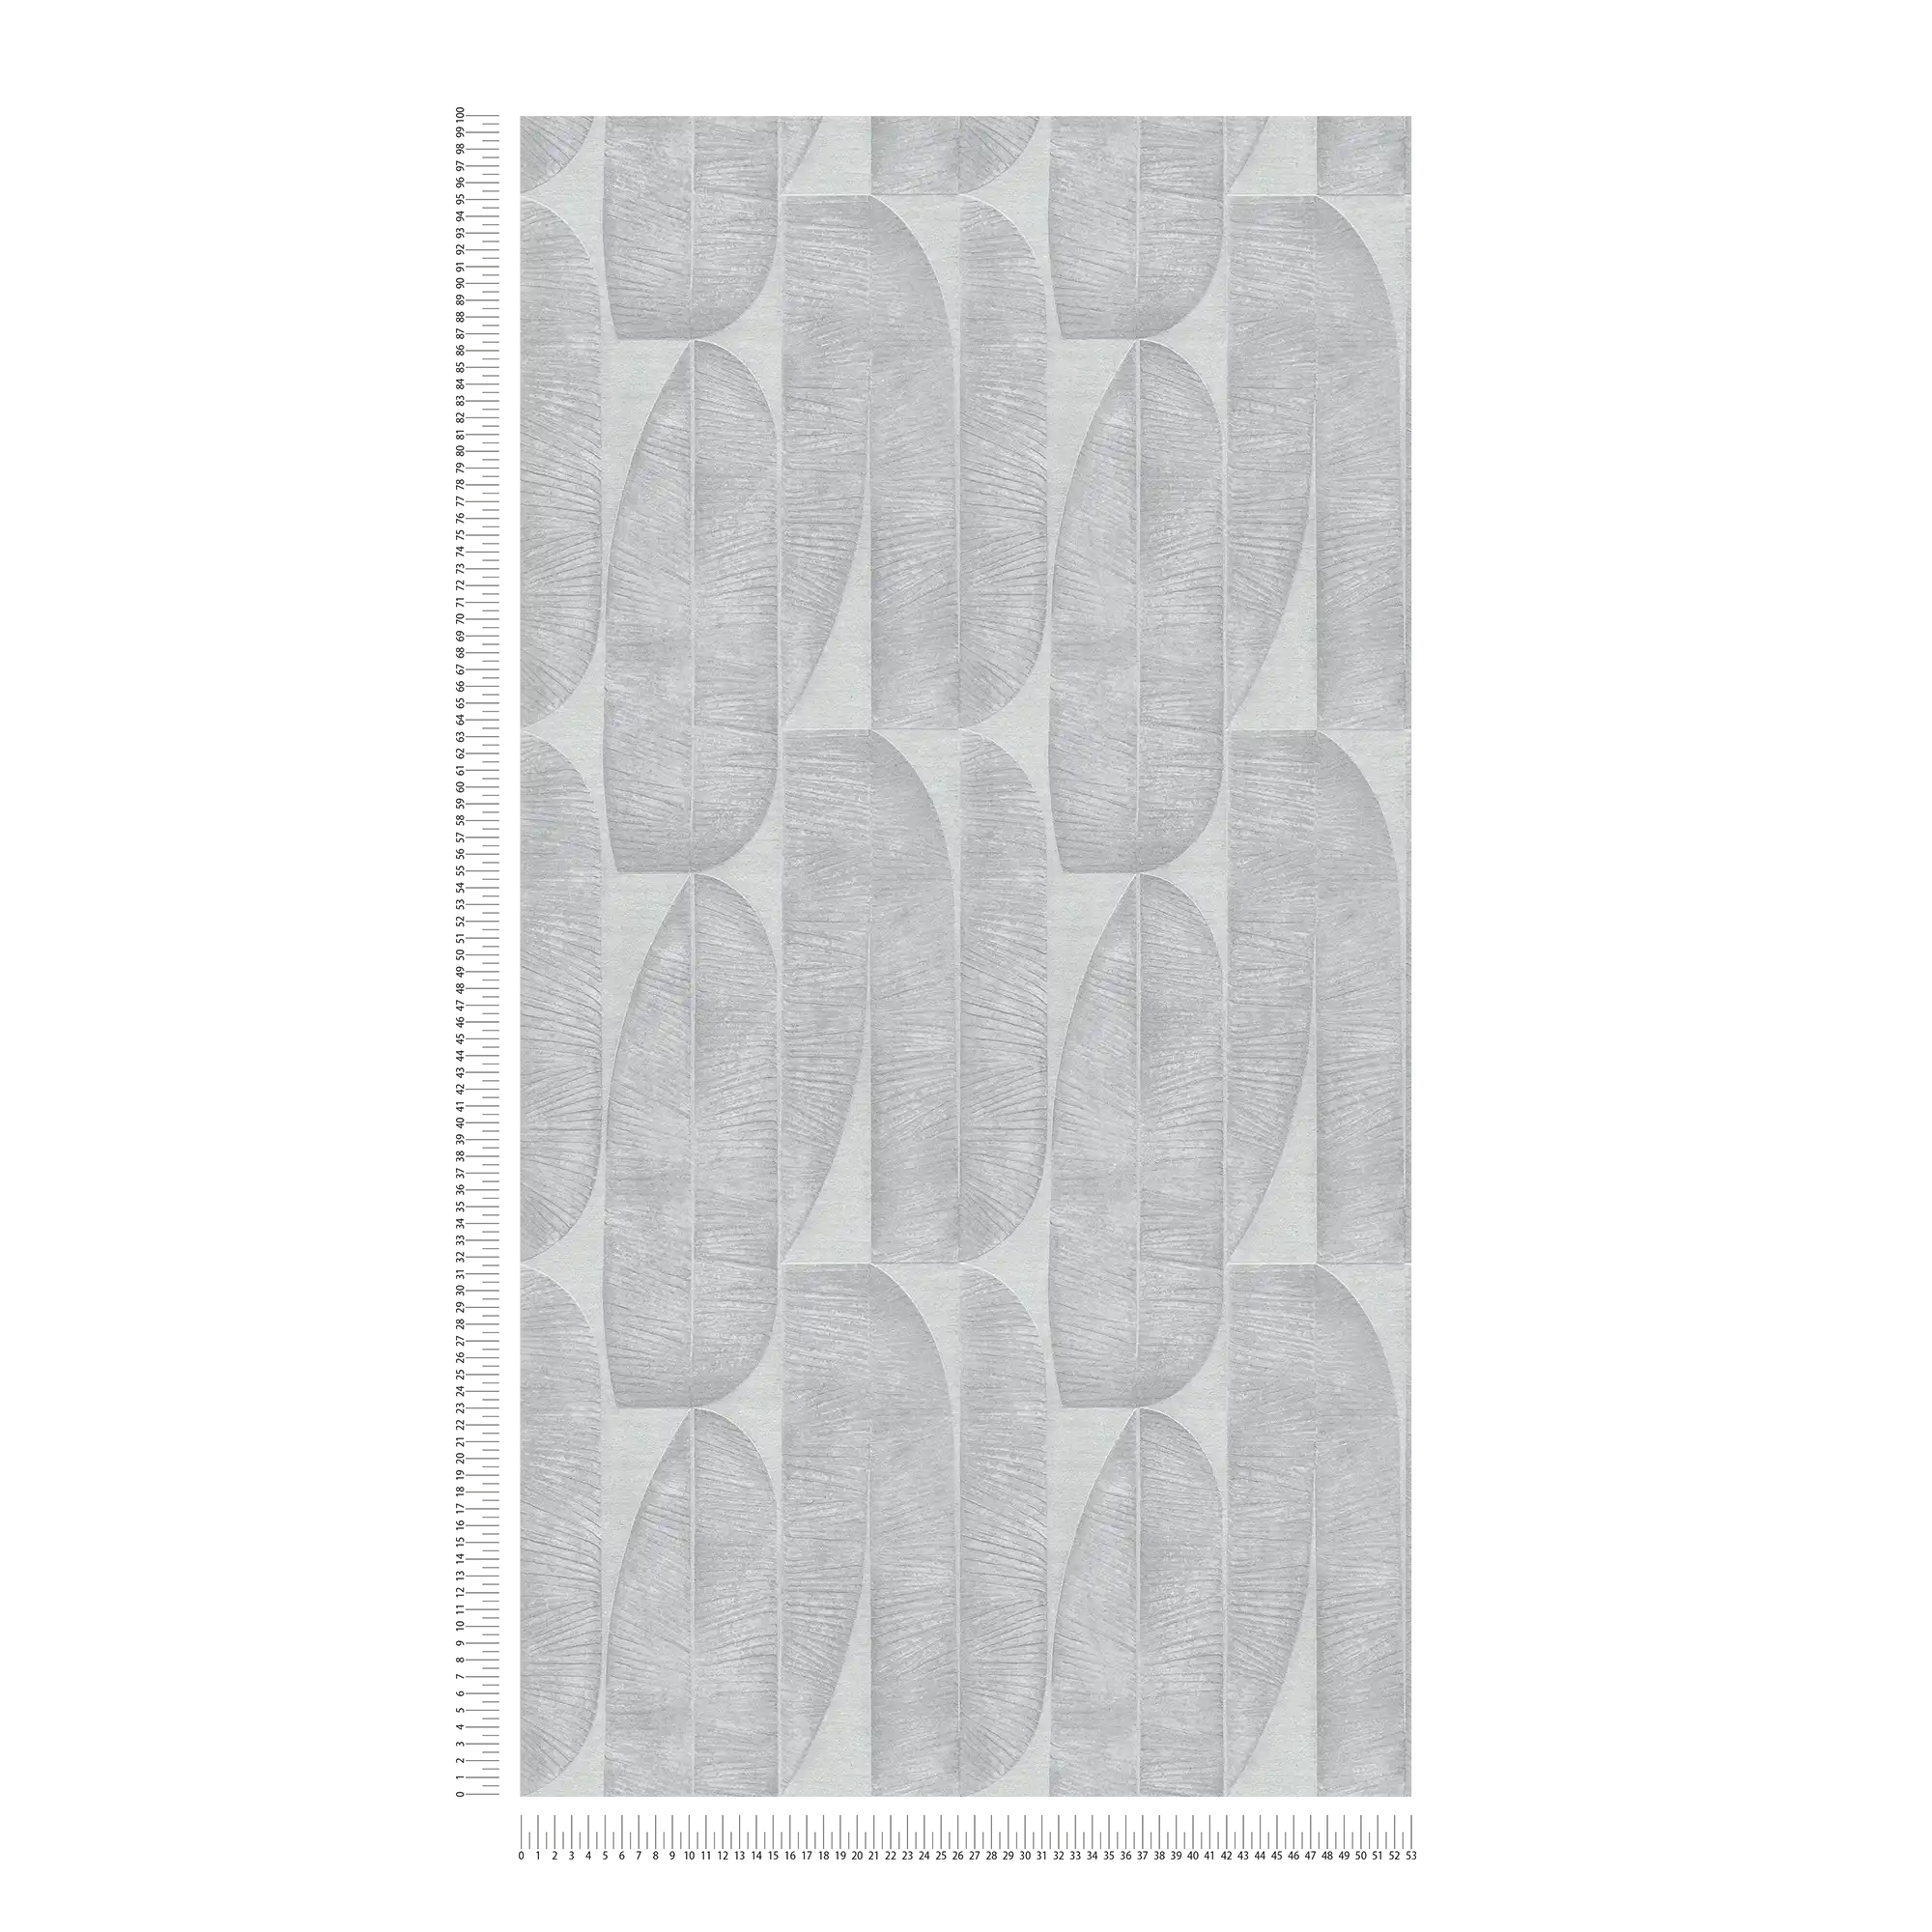             Tapete mit geometrischem Blattmuster – Grau
        